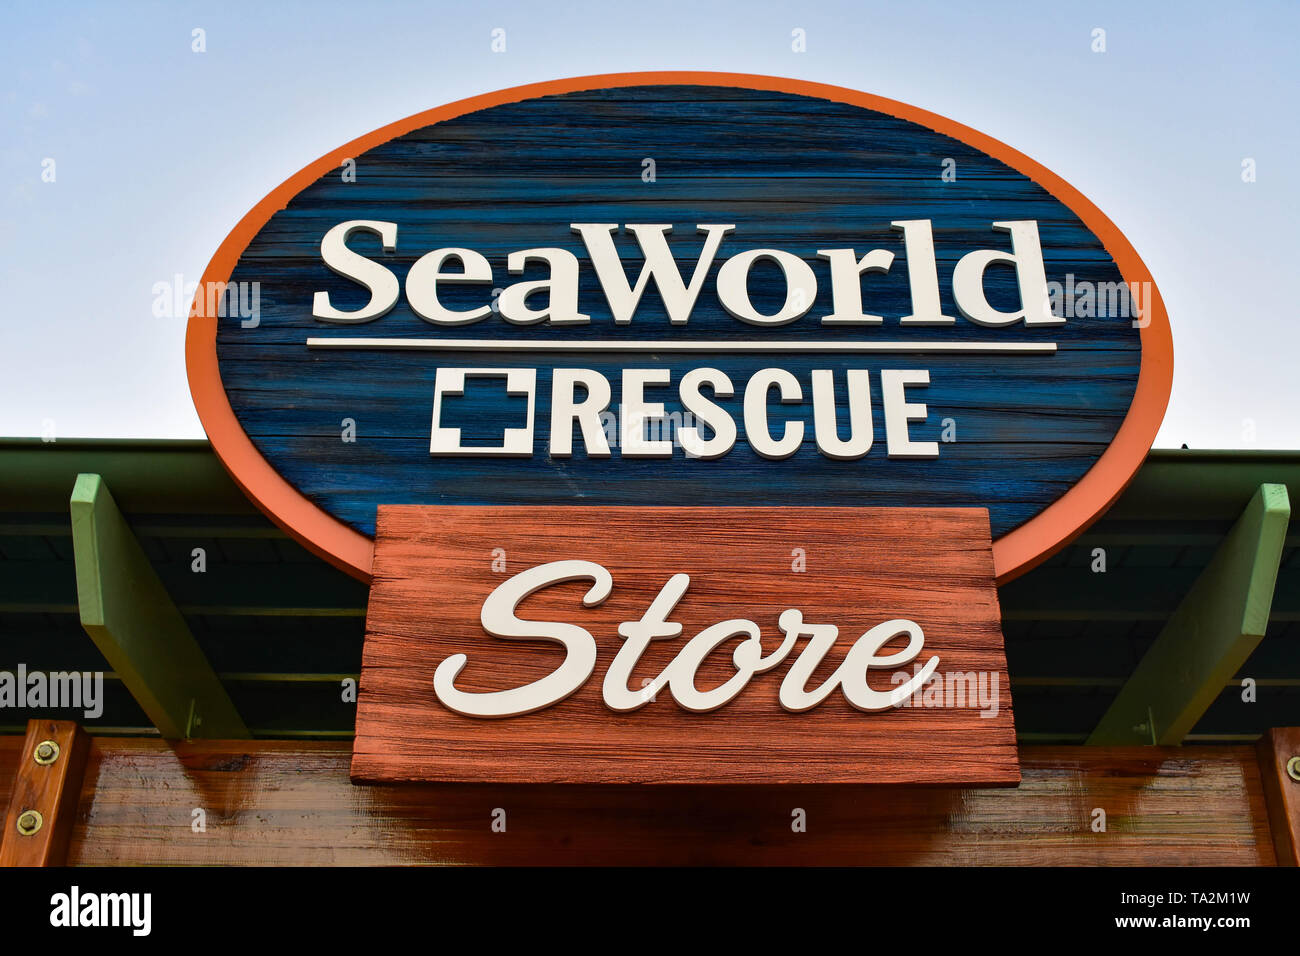 Orlando, Florida . February 26, 2019. Top view of Seaworld Rescue